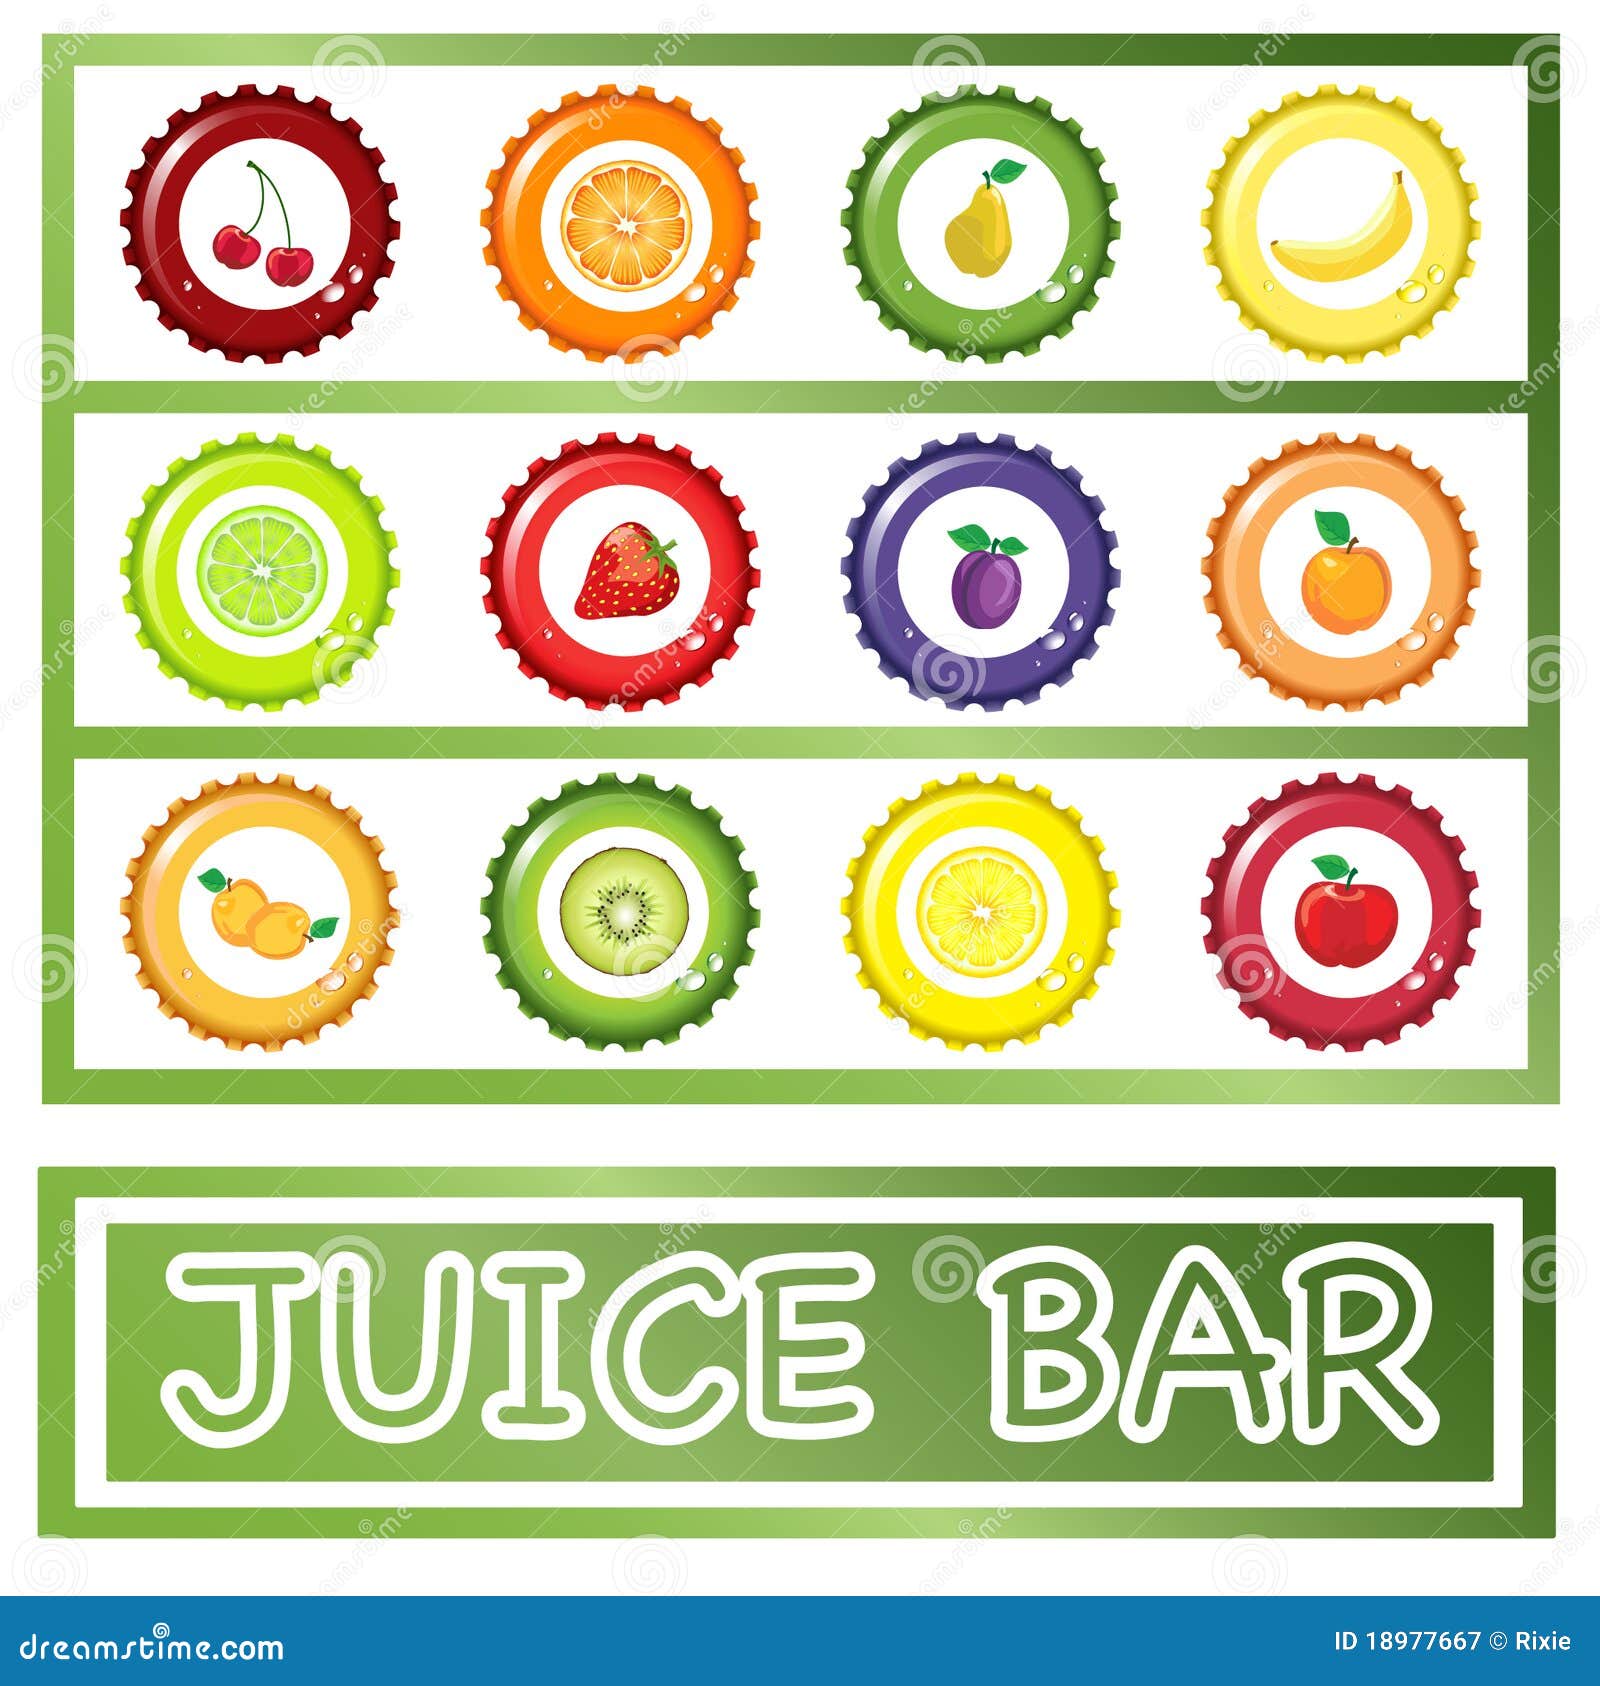 juice bar clipart - photo #34